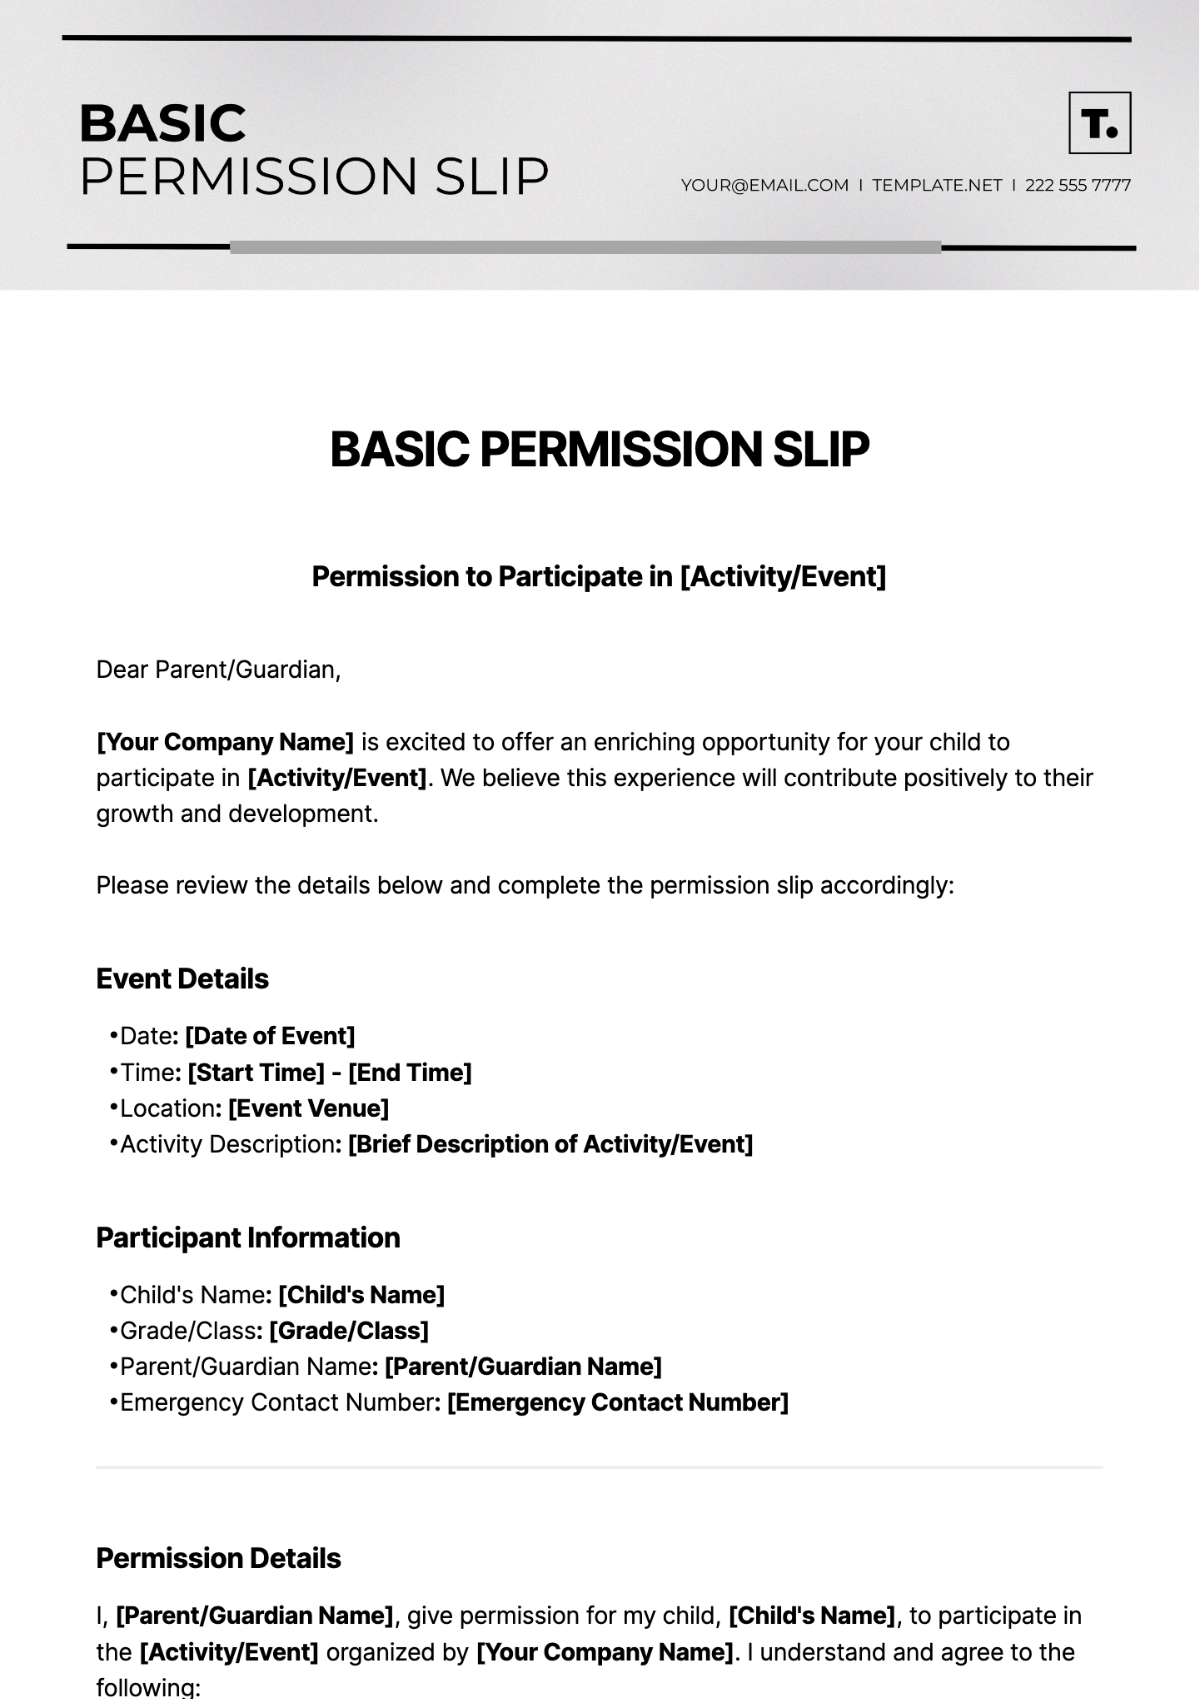 Basic Permission Slip Template